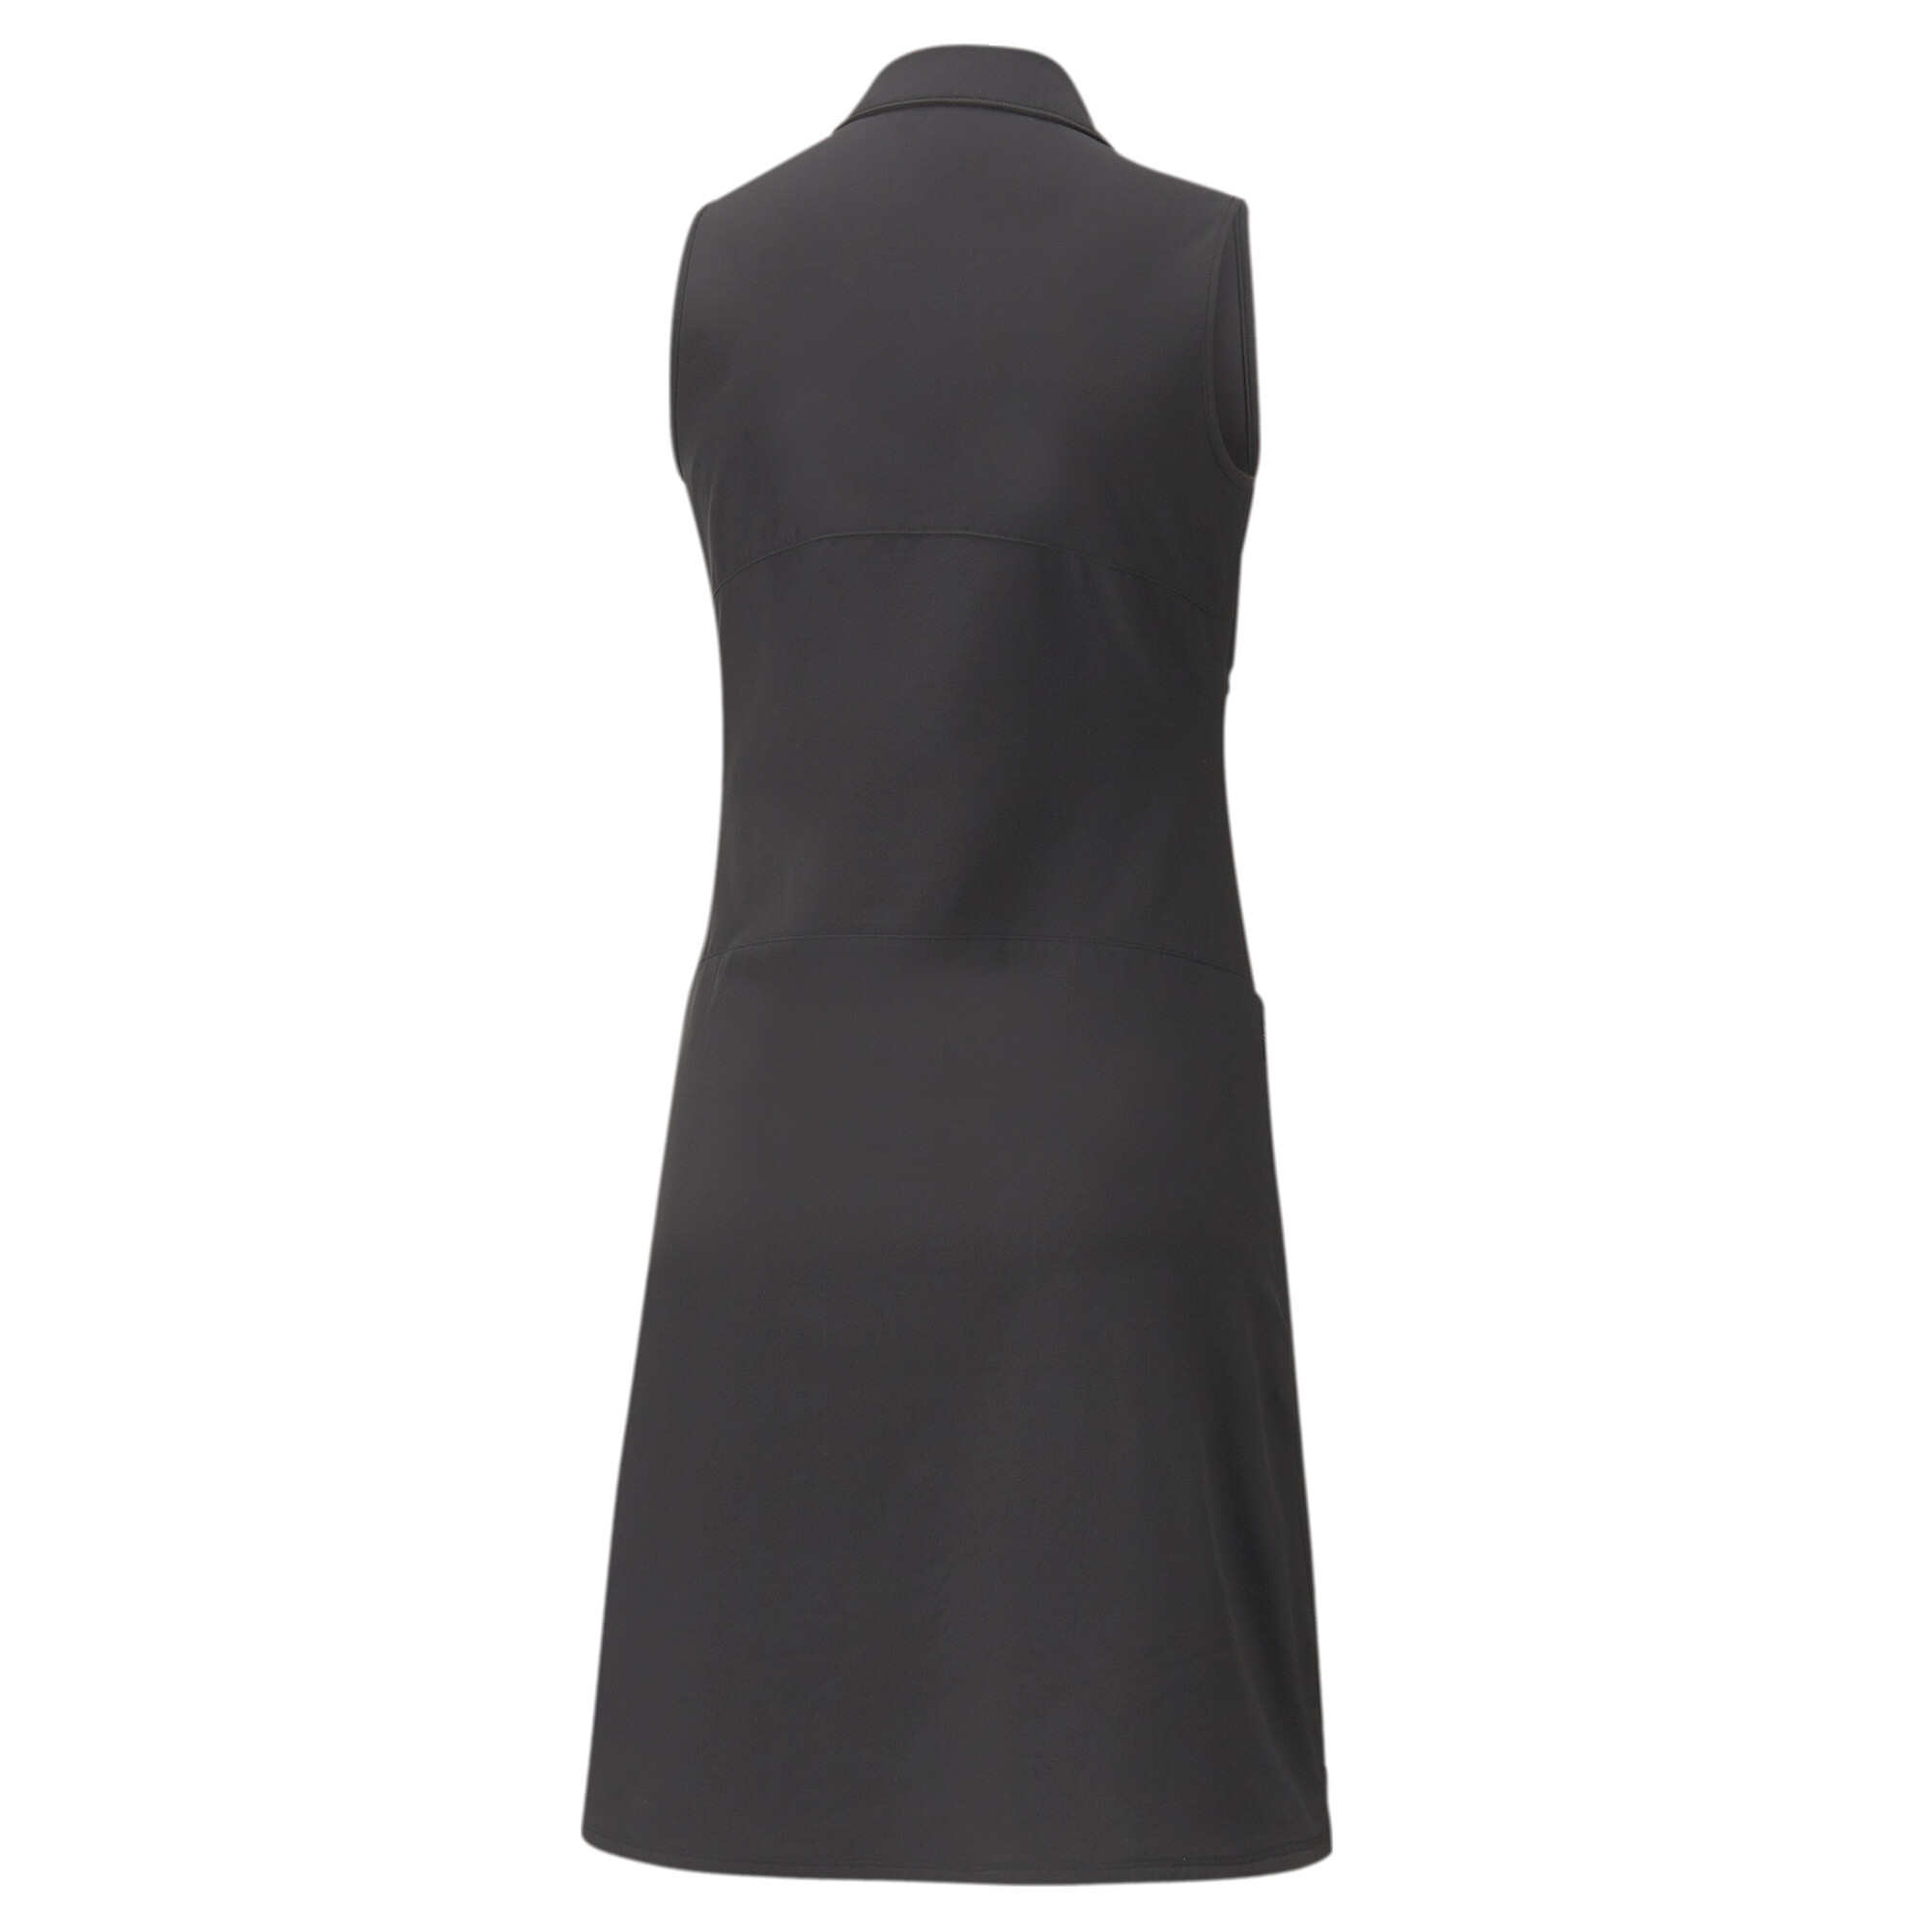 Women's Puma Cruise's Golf Dress, Black, Size L, Clothing